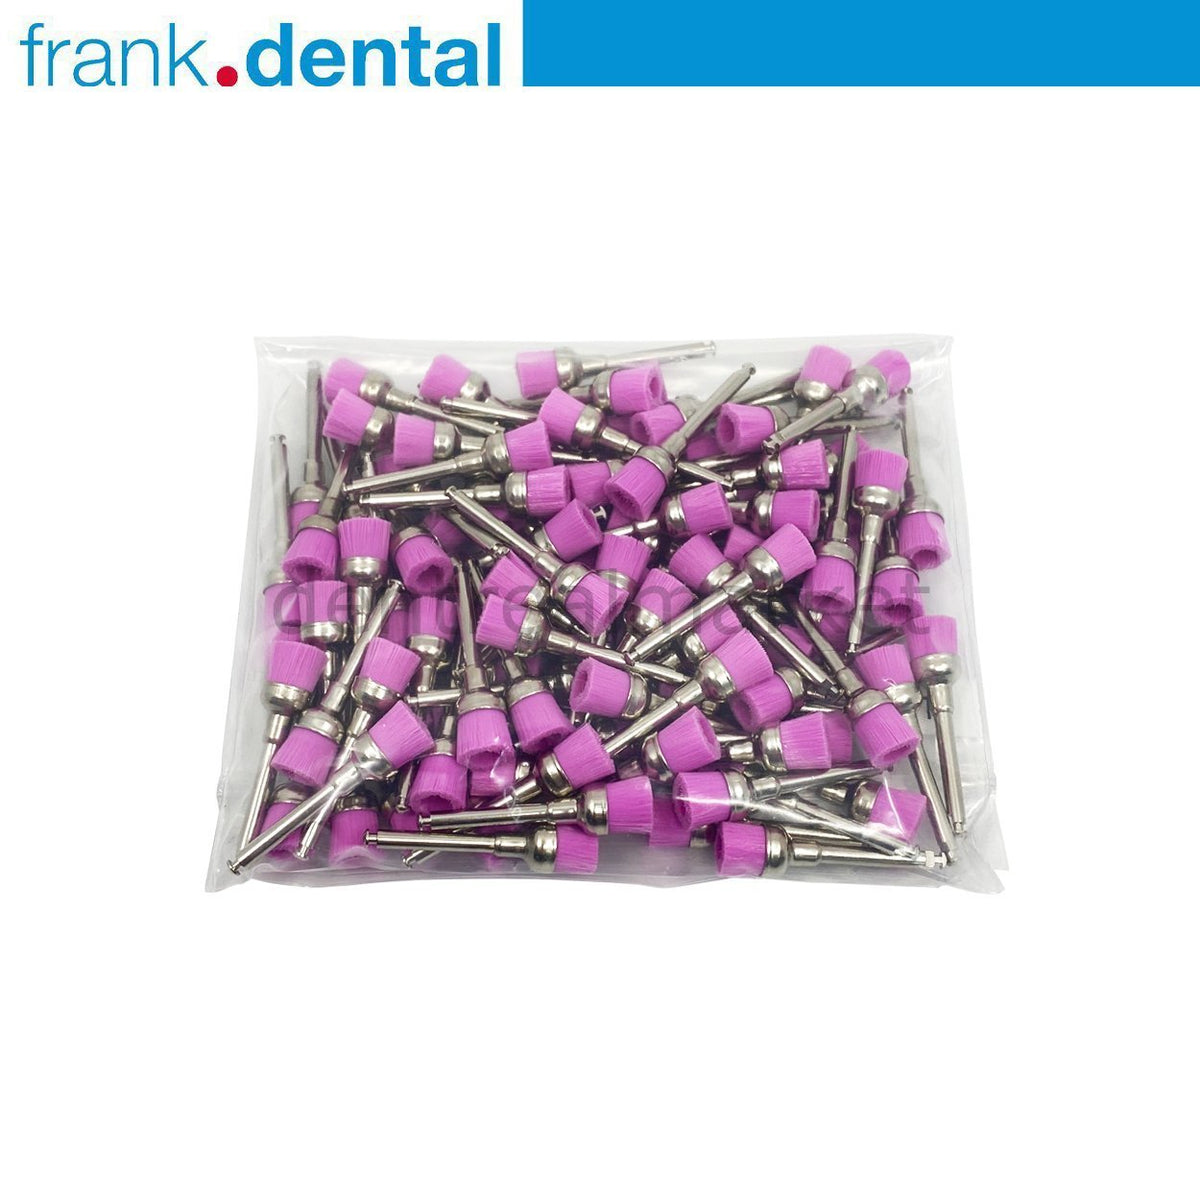 DentrealStore - Frank Dental Nylon Detergent Brush - Soft - 100 pcs